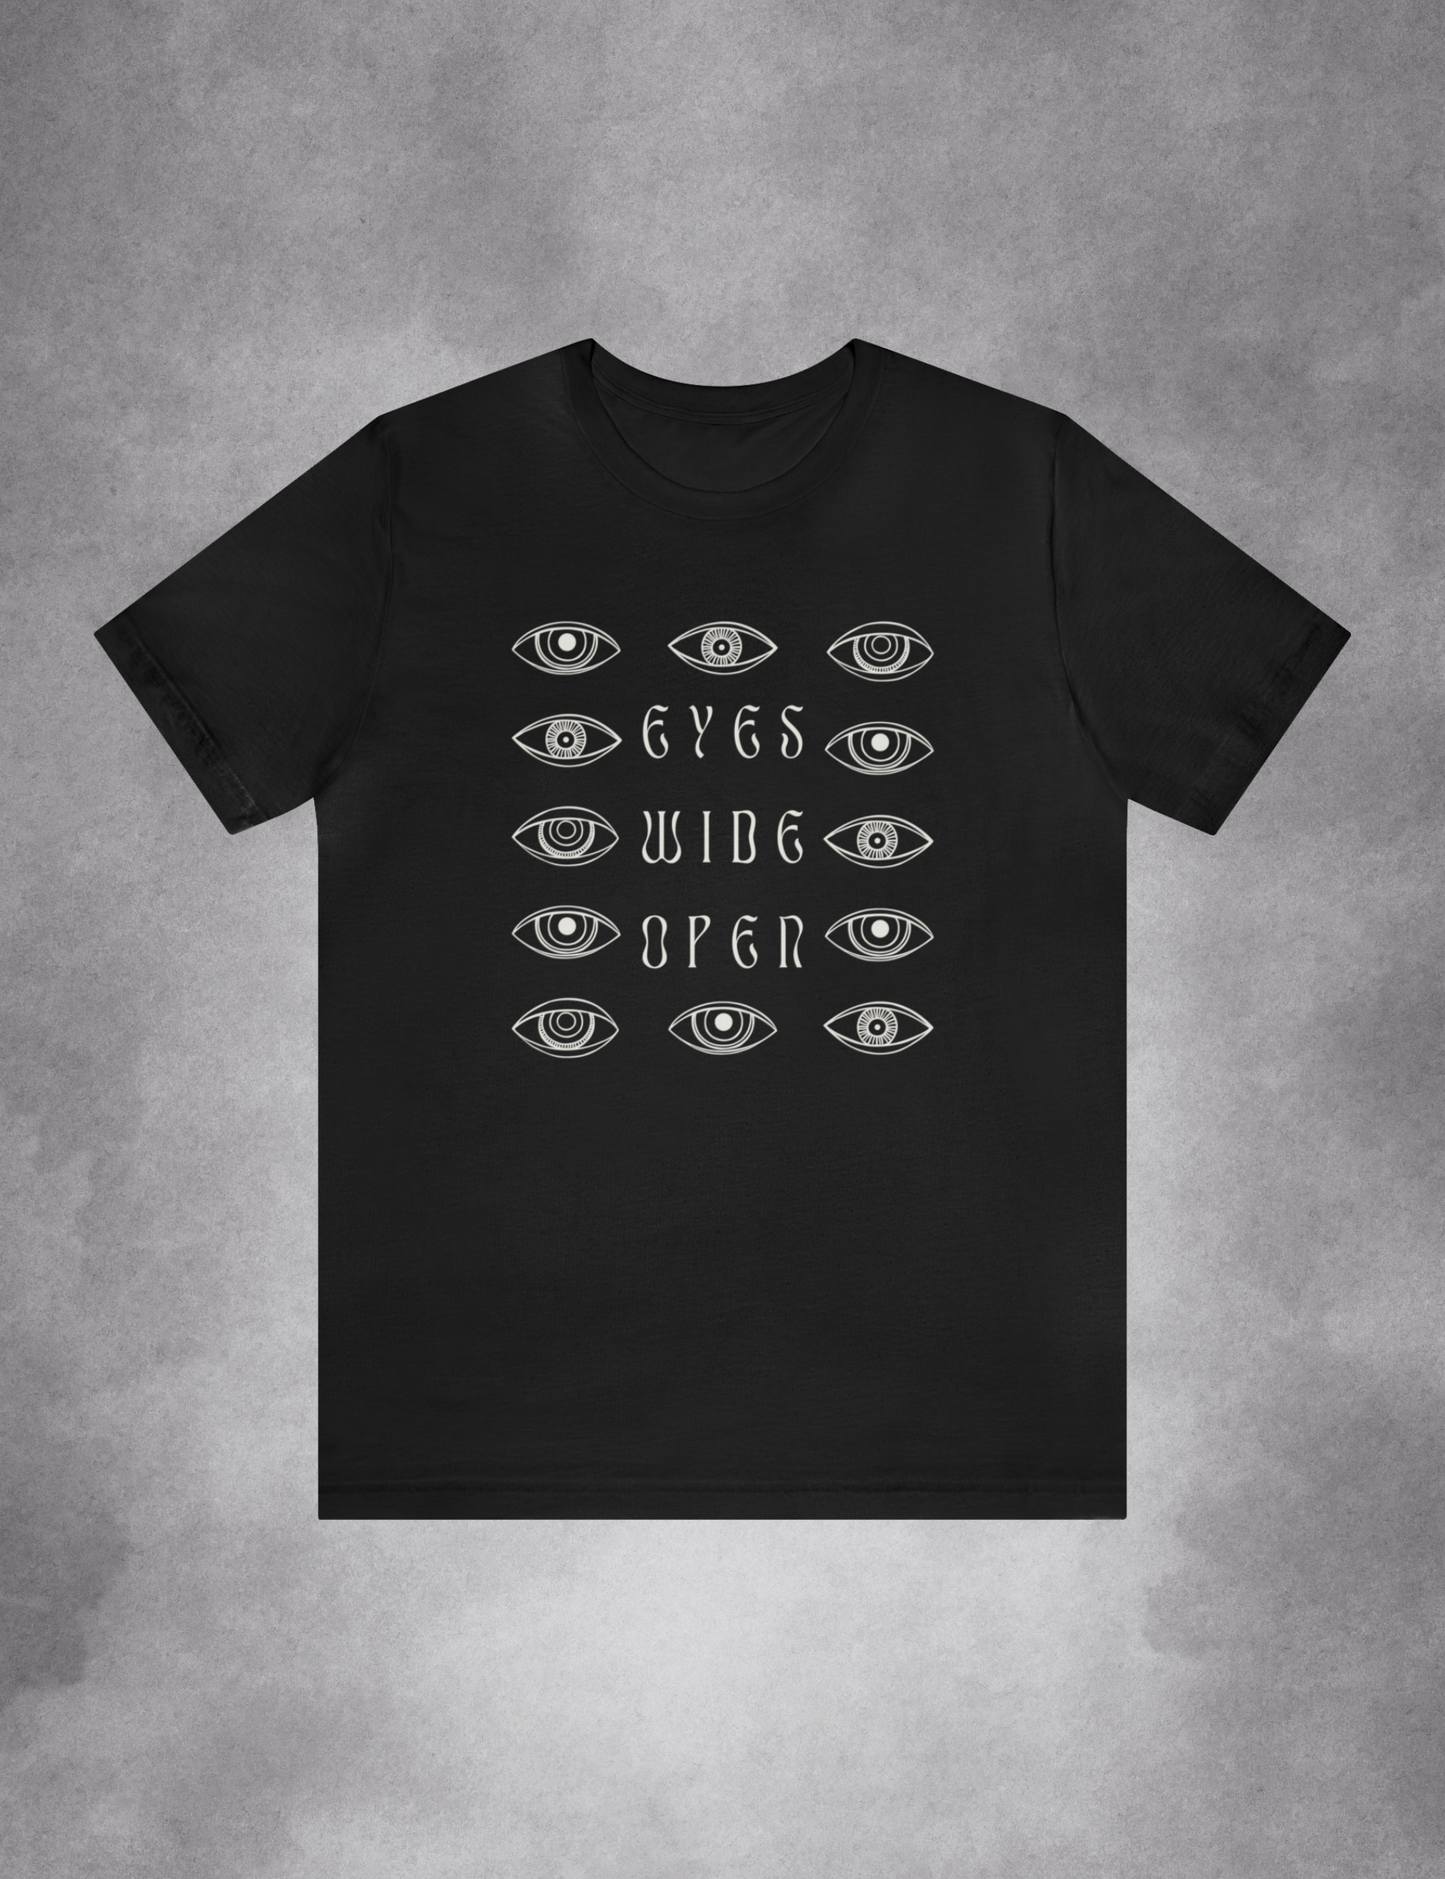 Evil Eyes Witchy Mystical Plus Size Goth Clothing Shirt